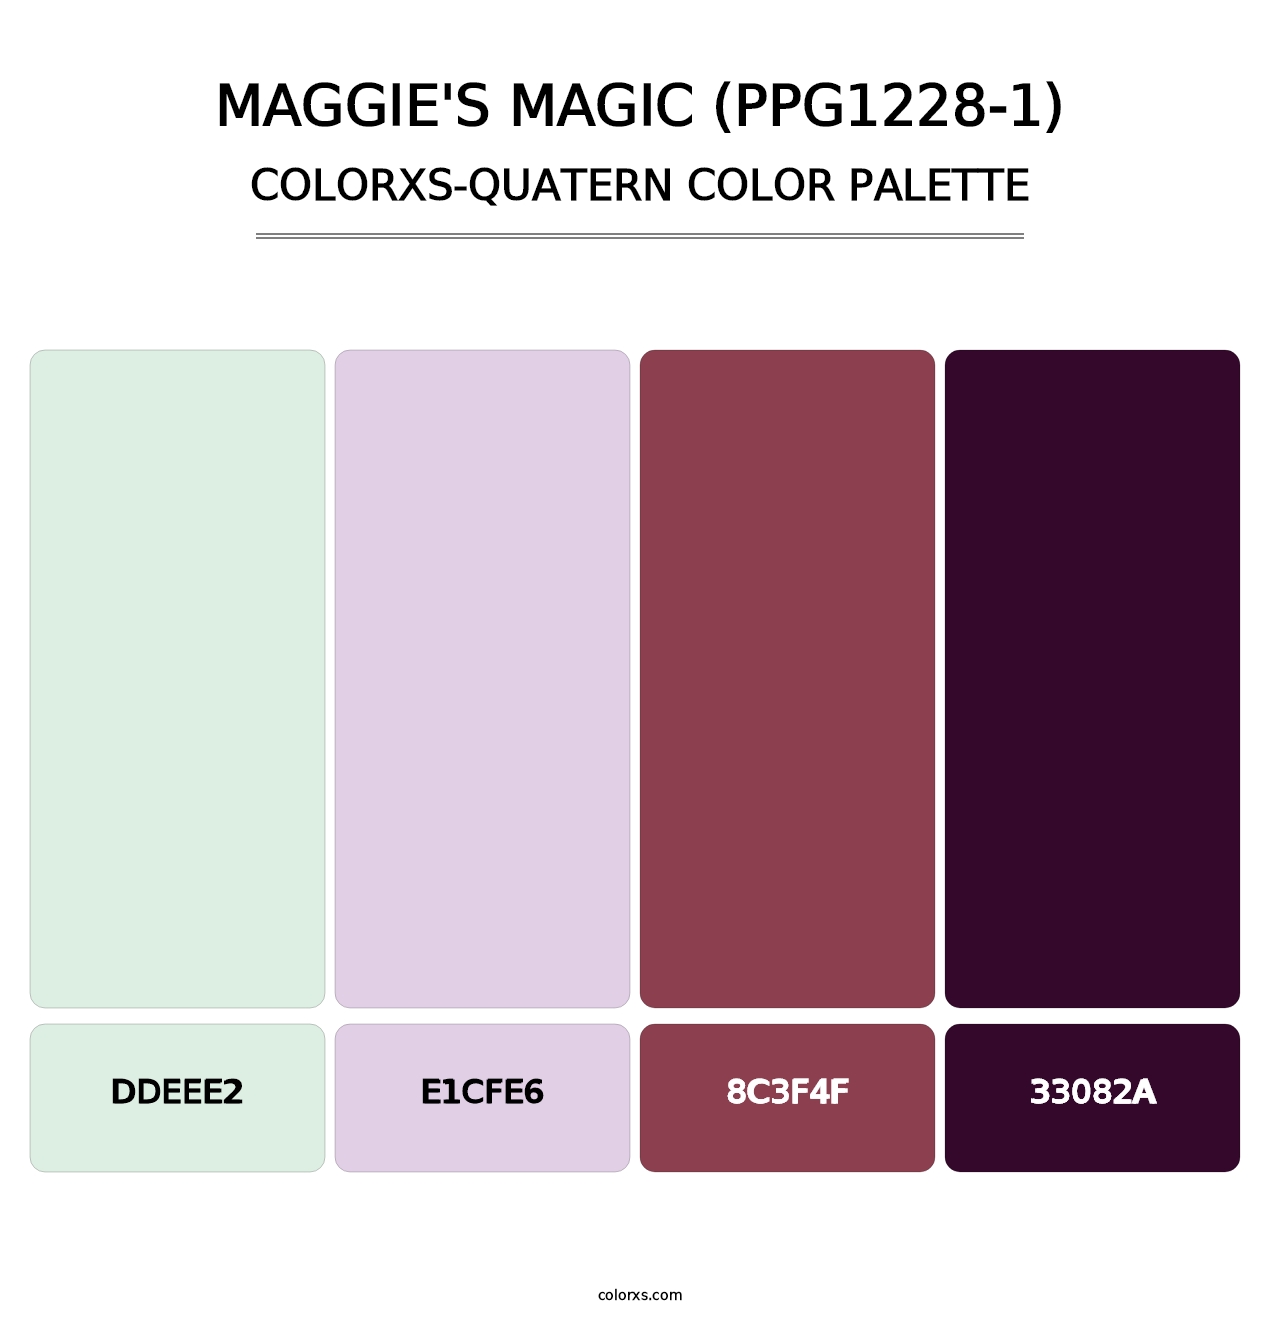 Maggie's Magic (PPG1228-1) - Colorxs Quatern Palette